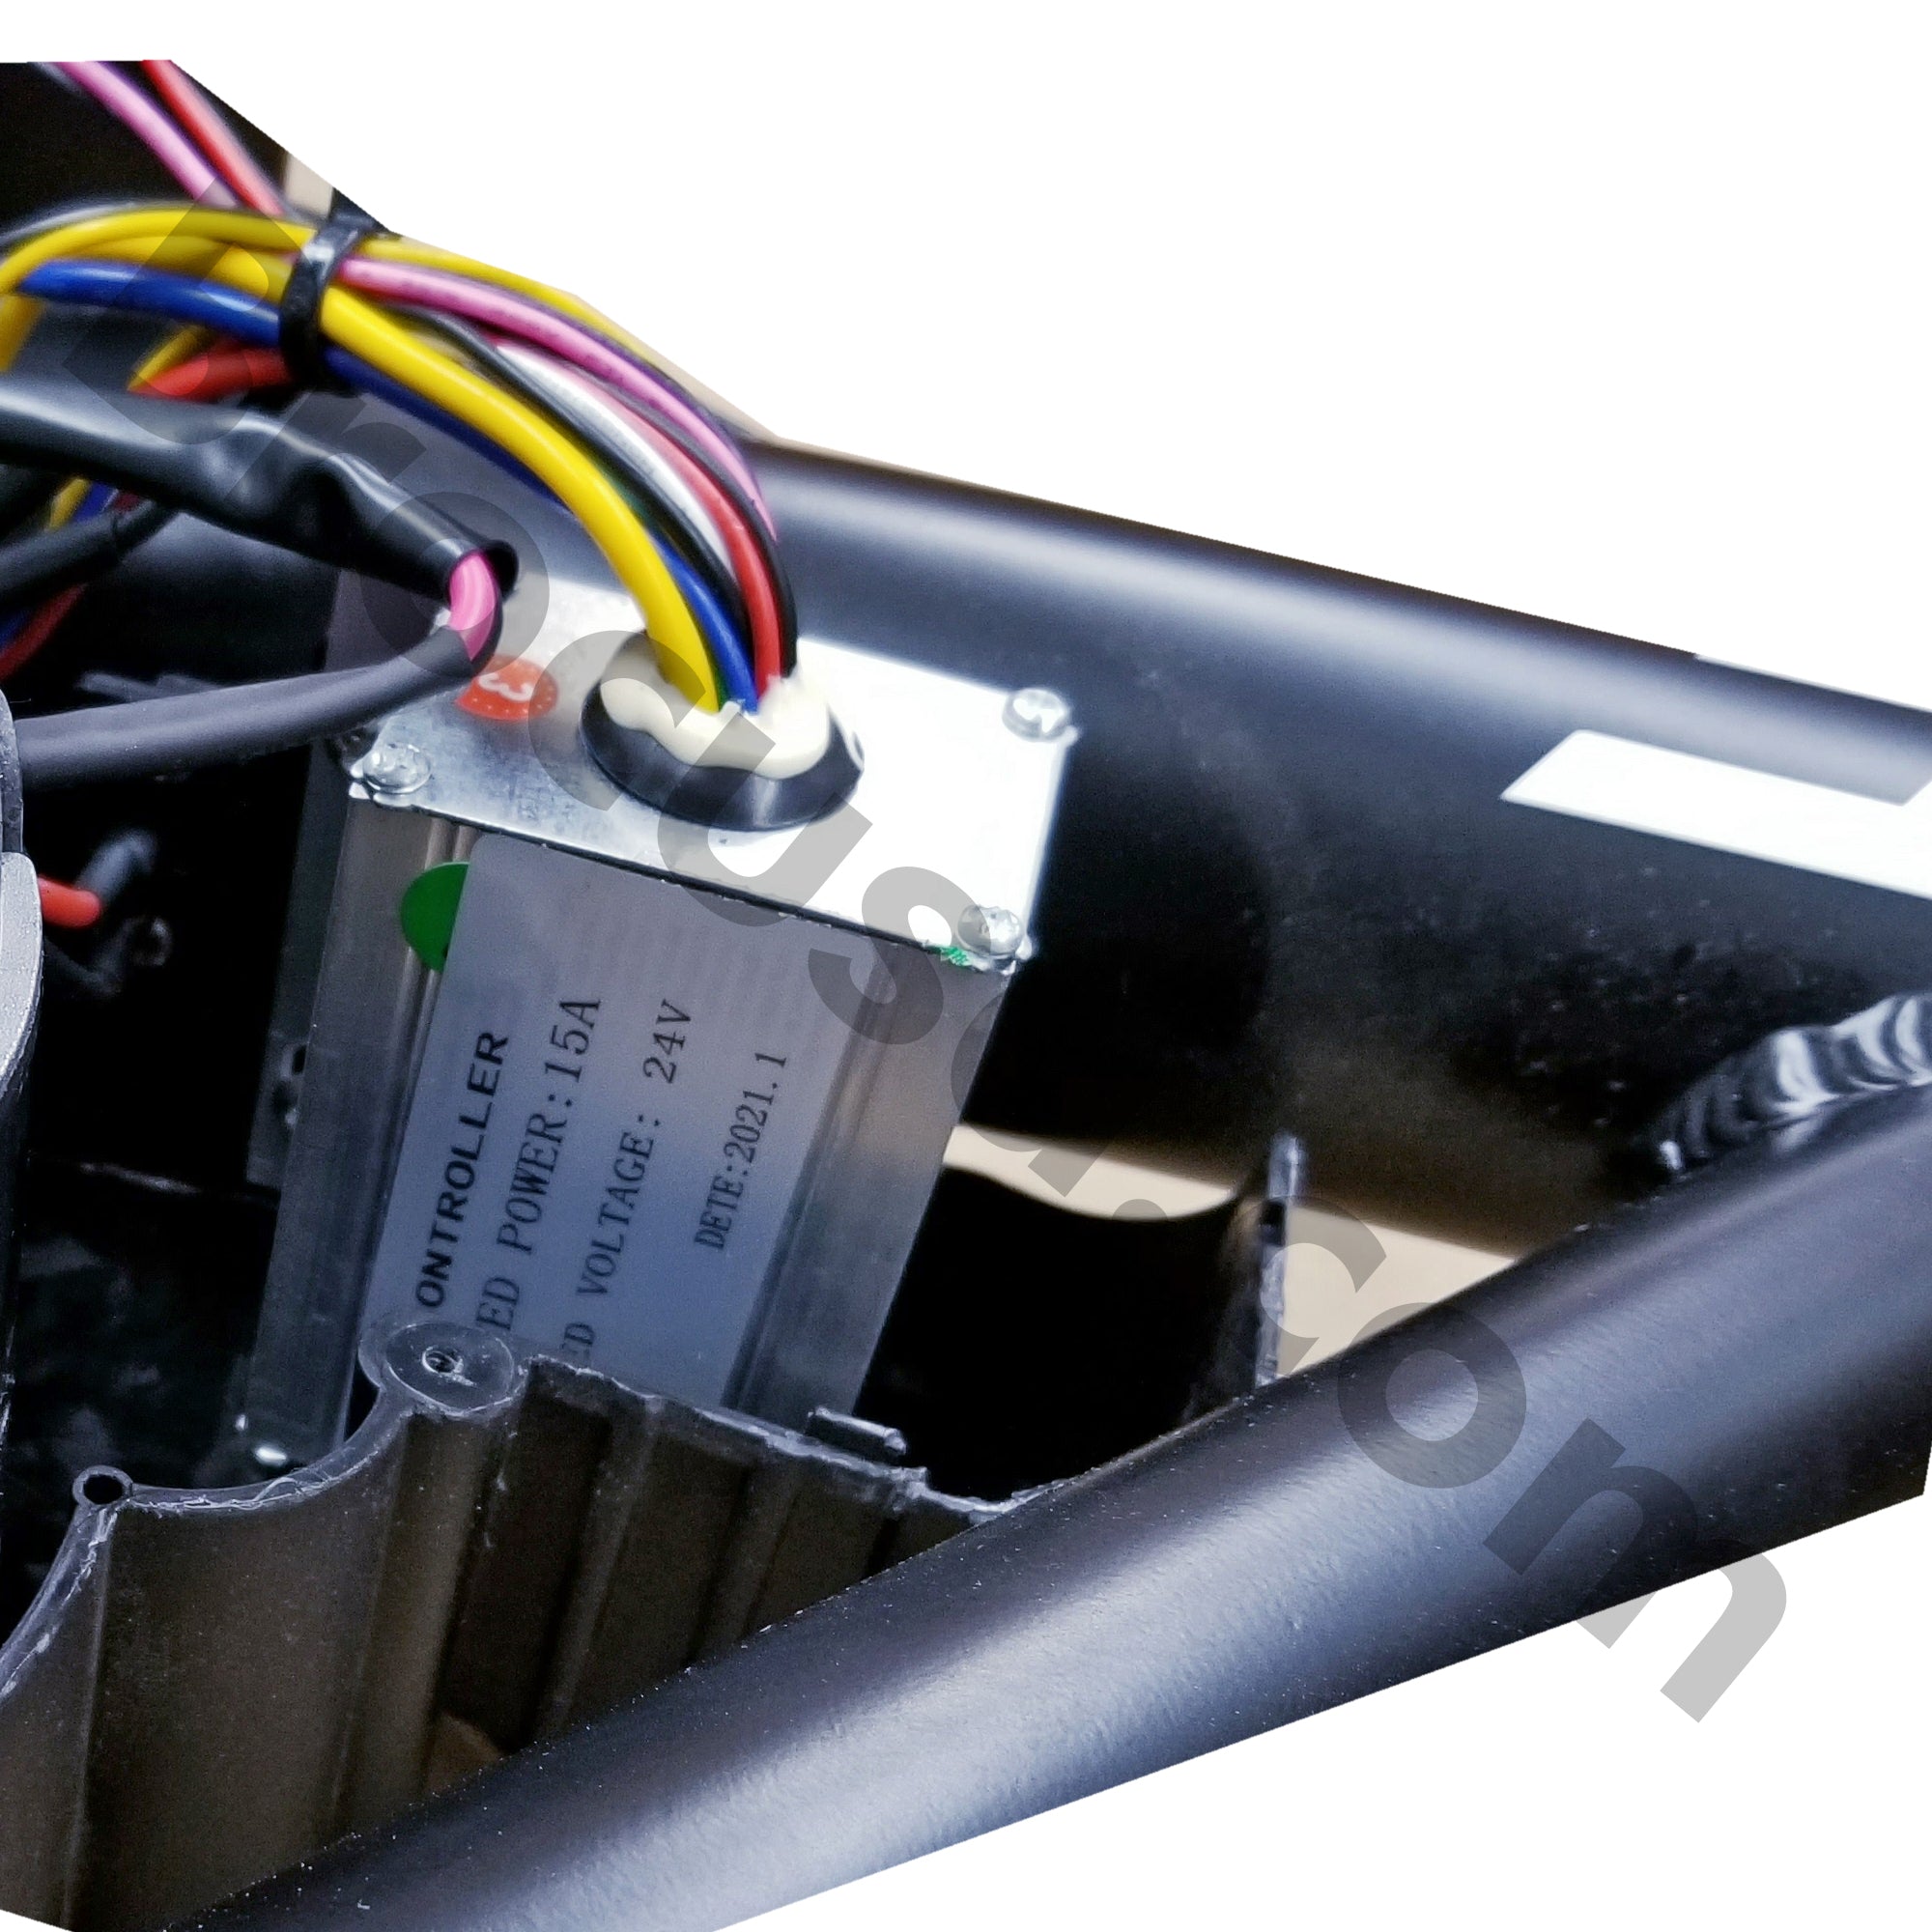 BROCUSA Balance e-bike 12"-16" Control Box OEM Replacement | Parts